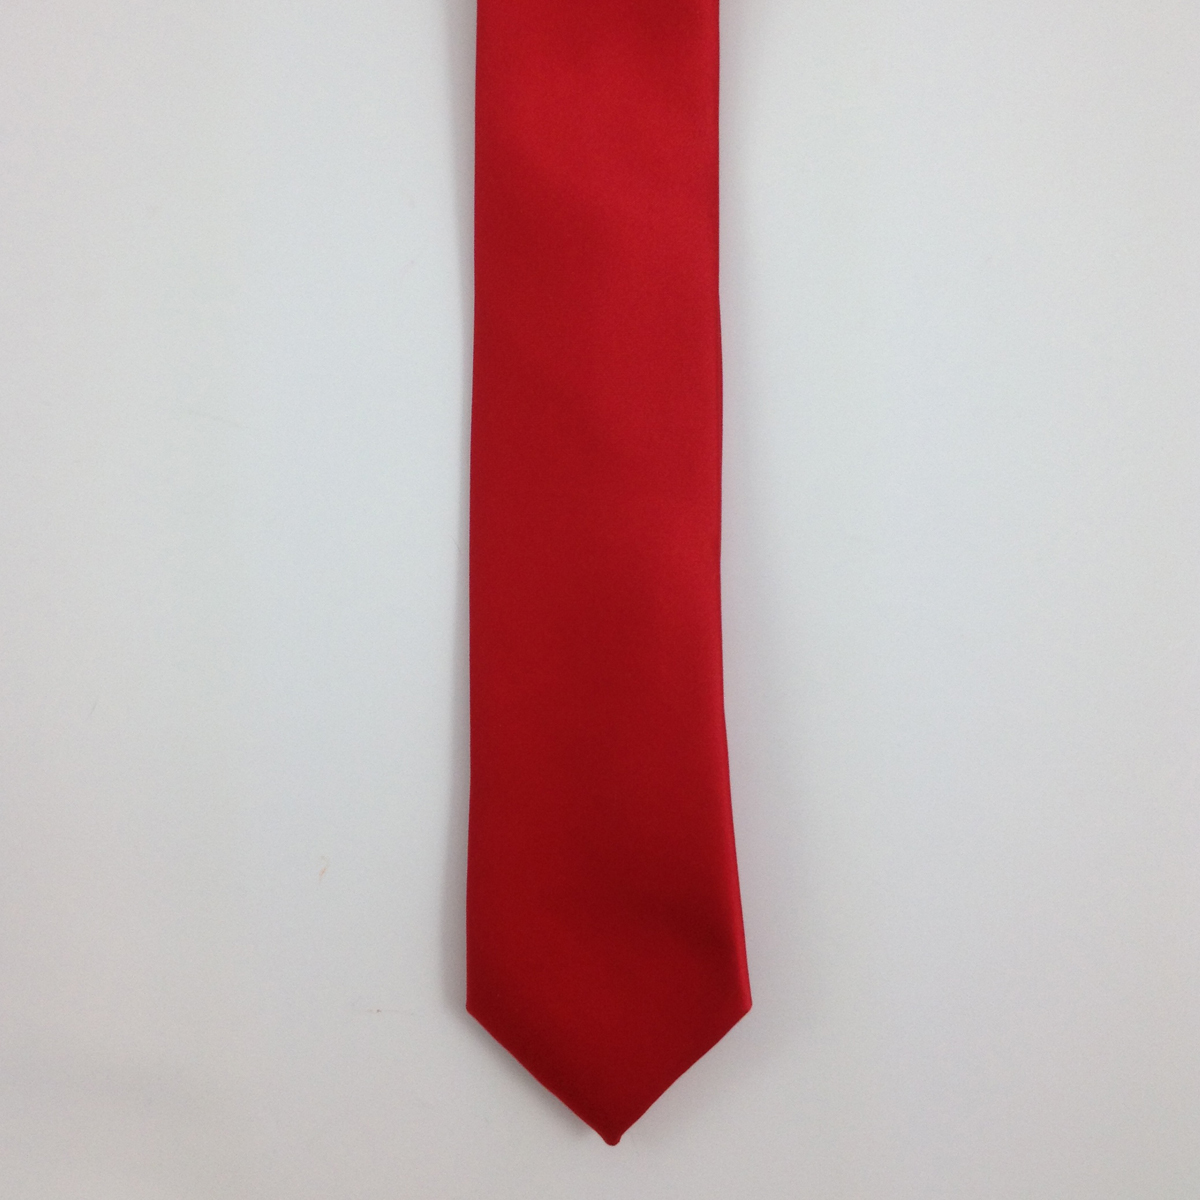 satin plain red s mens ties facemasks con murphys menswear cork - - Con Murphys Menswear